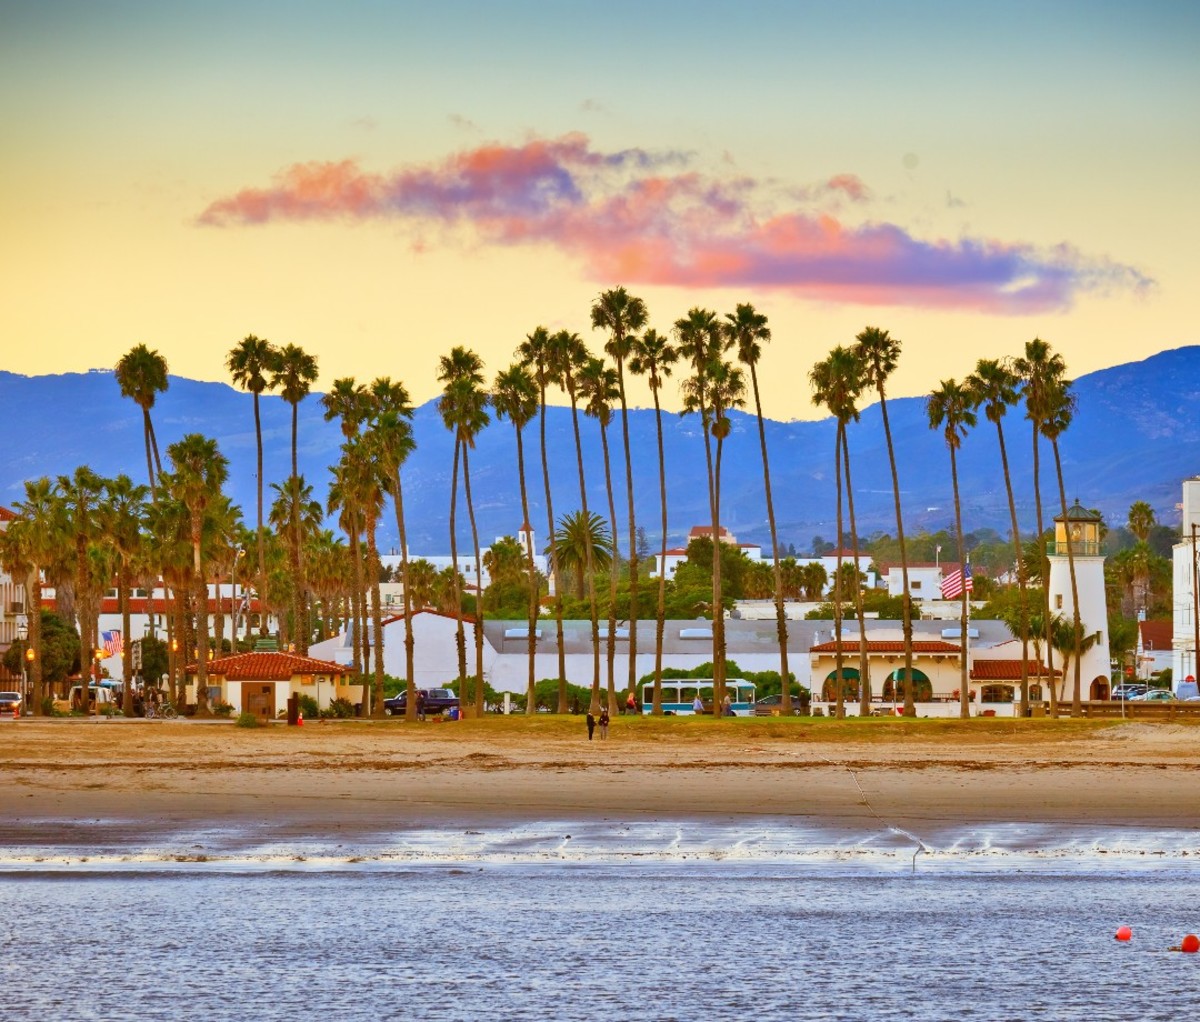 A row of palms in Santa Barbara, California